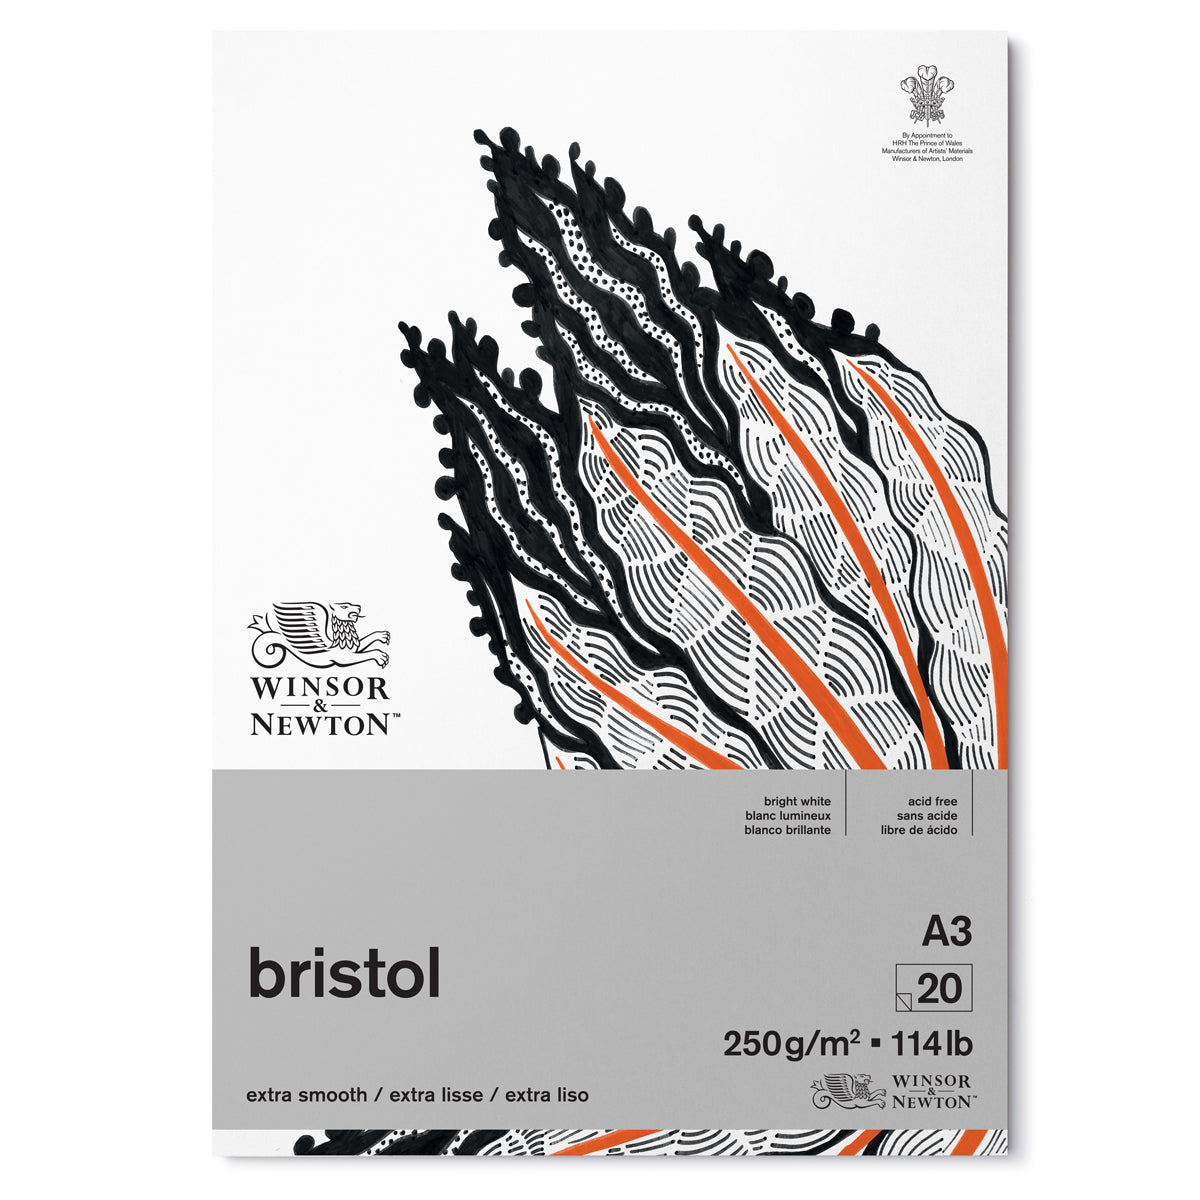 Winsor et Newton - Extra Smooth Bristol Bristol Sketch Pad 250gsm - A3